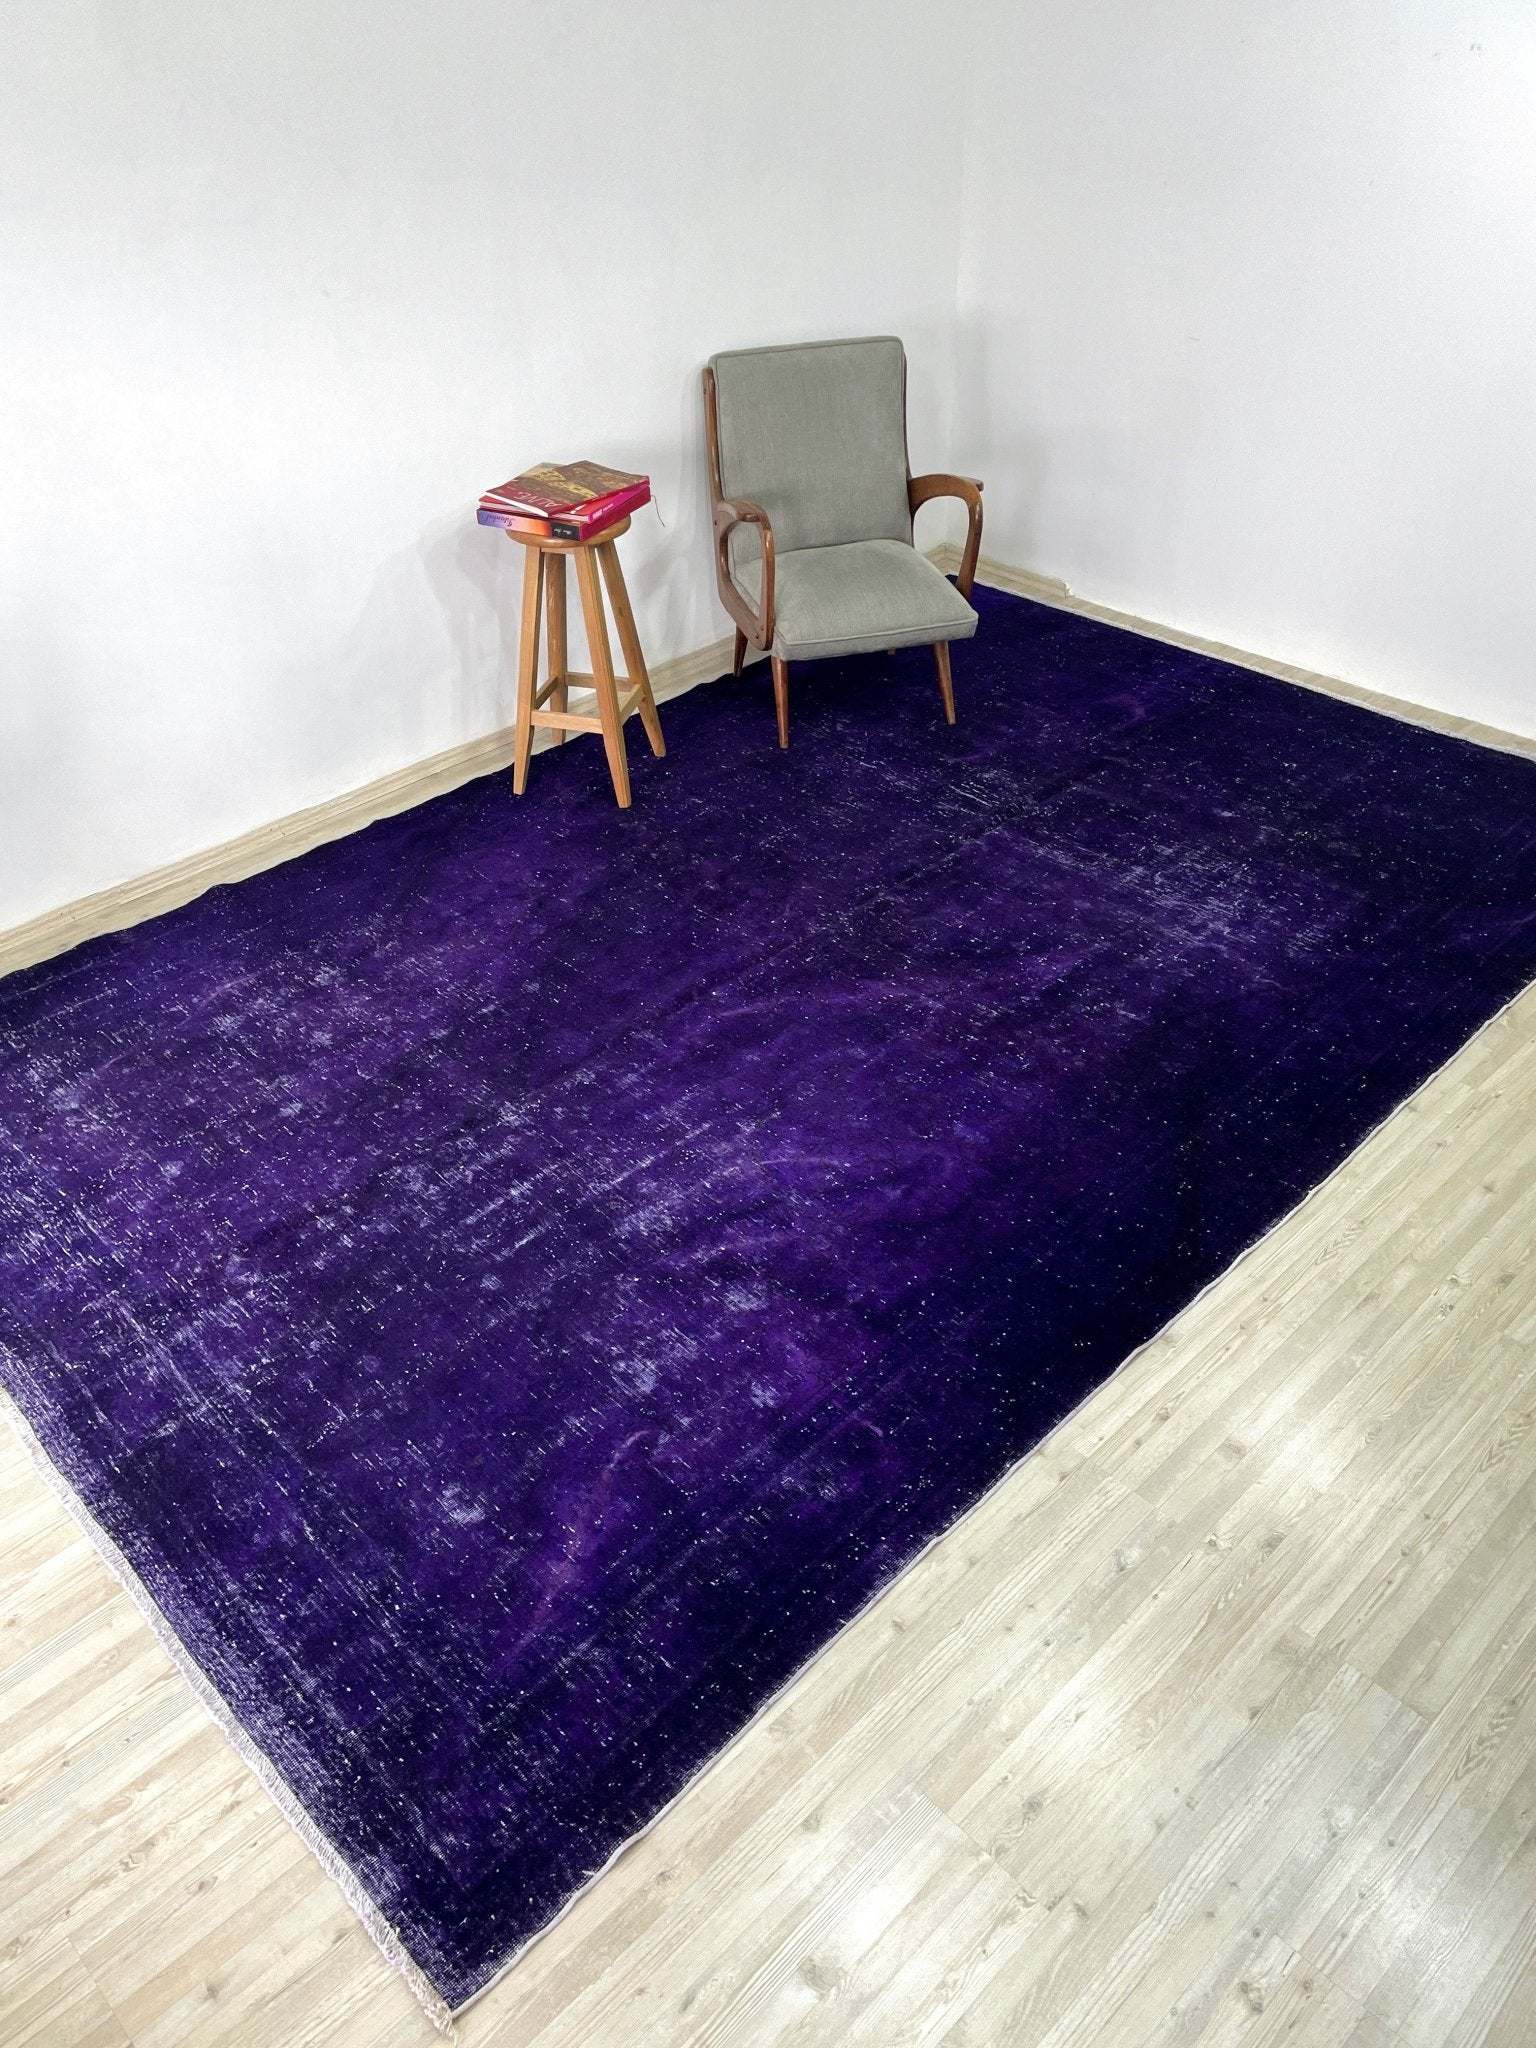 overdyed handmade turkish rug shop san francisco bay area. Oriental Rug shop palo alto berkeley Buy affordable rug online